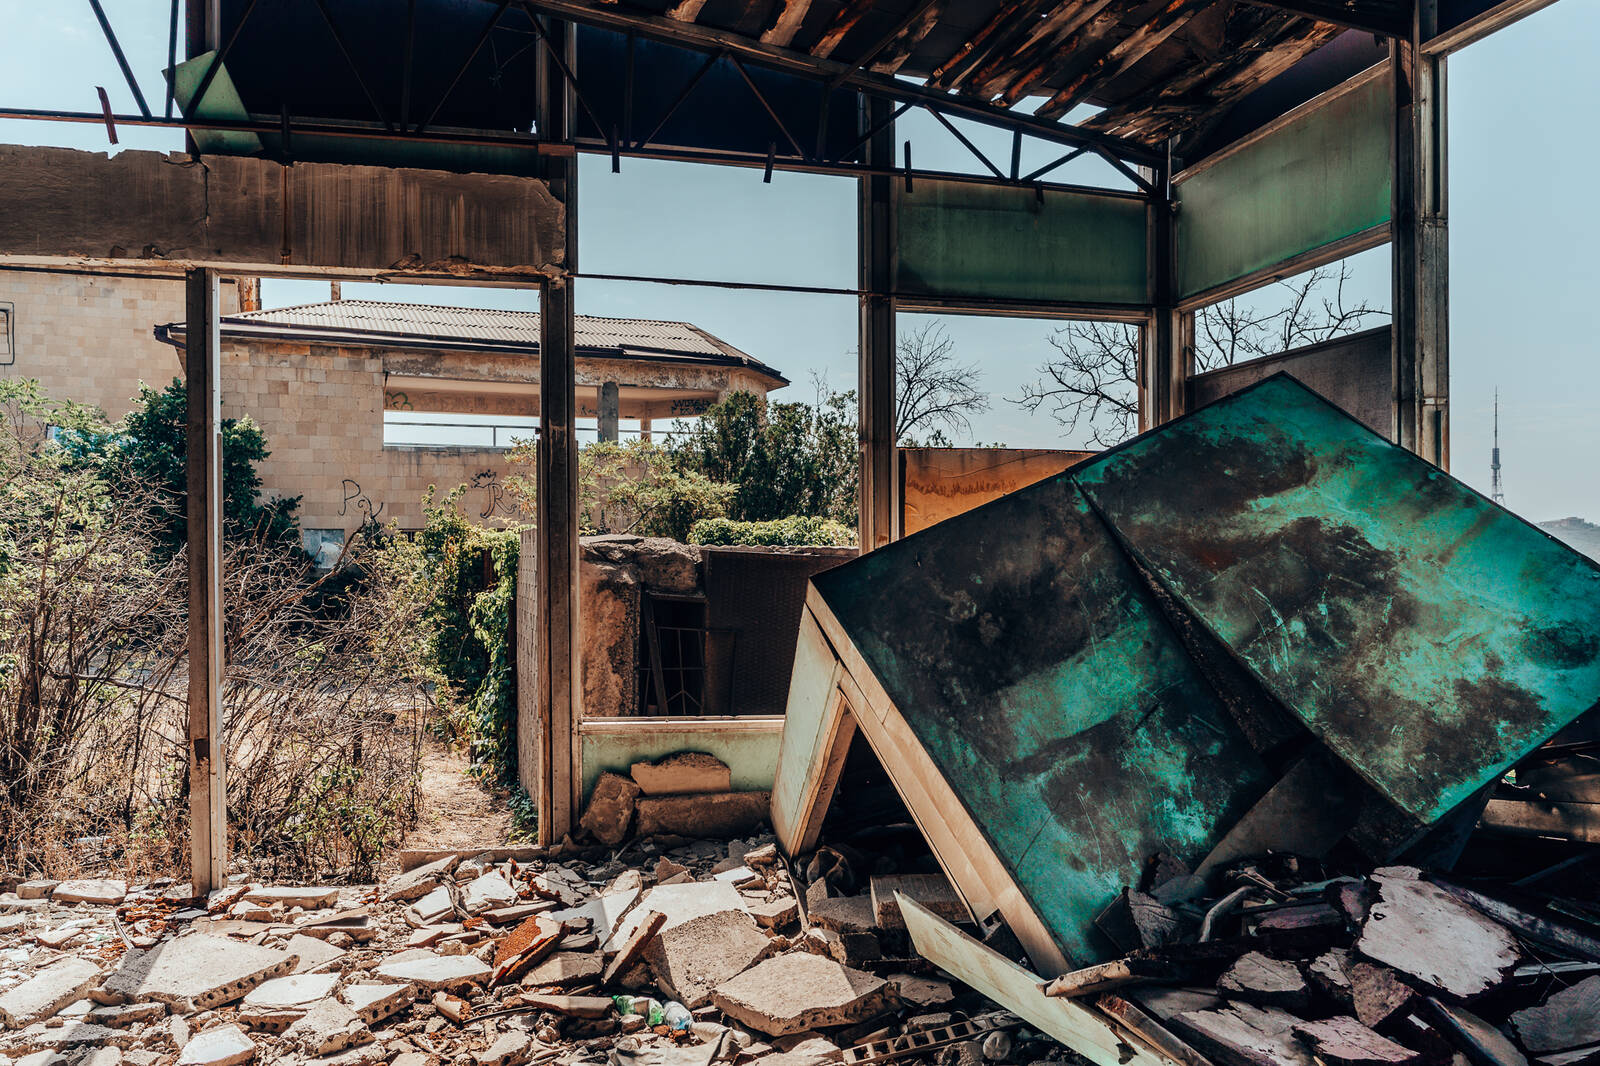 Image of Aragil - abandoned restaurant by James Billings.